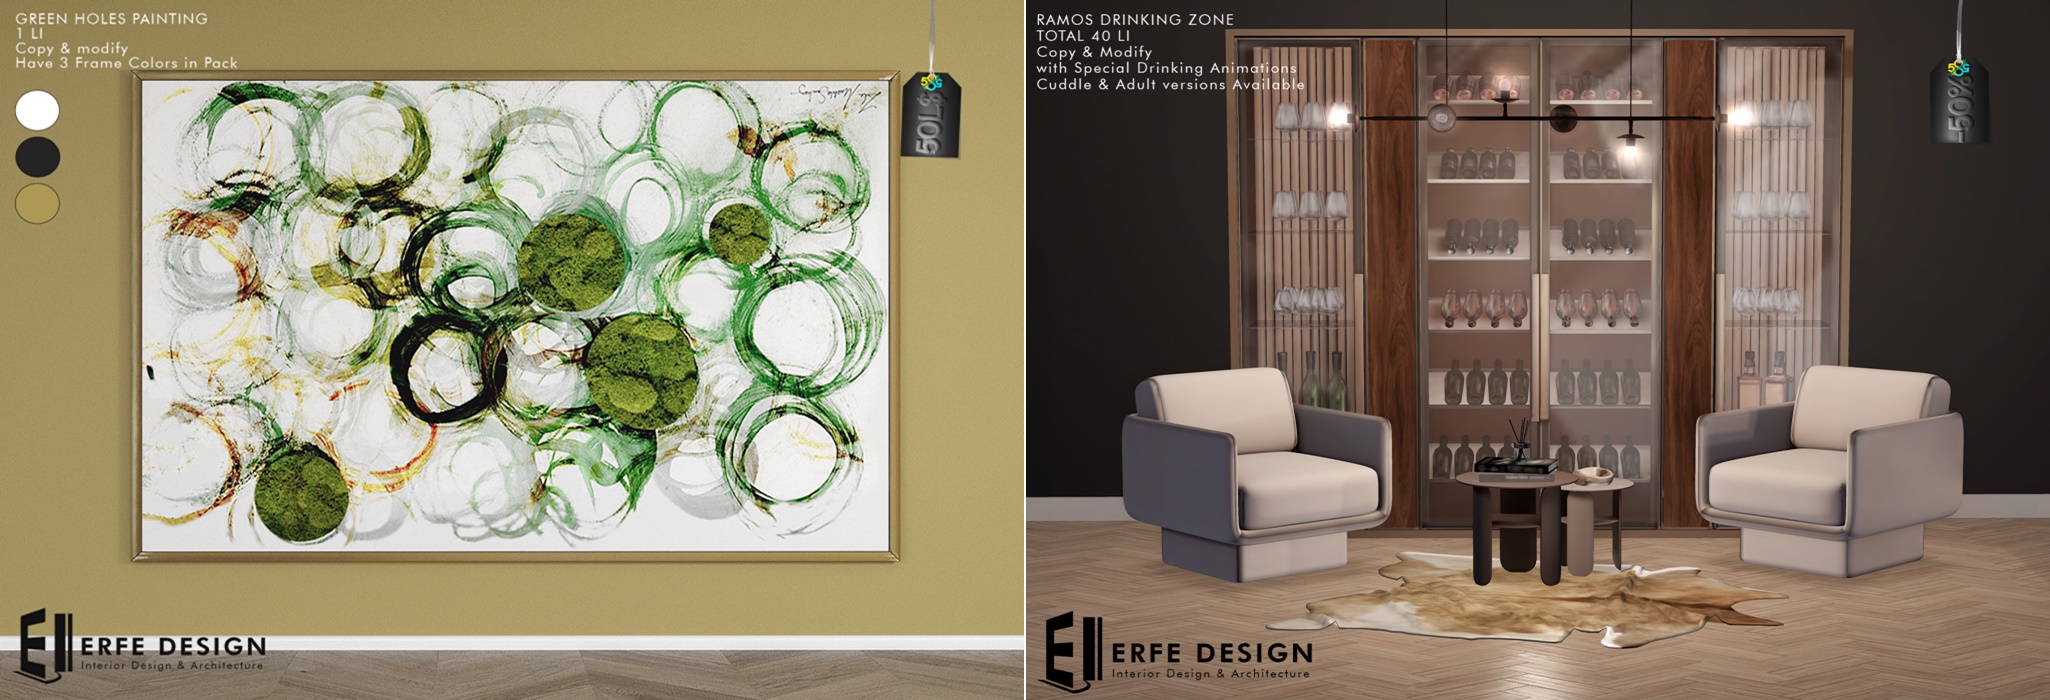 Erfe Design – Green Holes & Ramos Drinking Zone